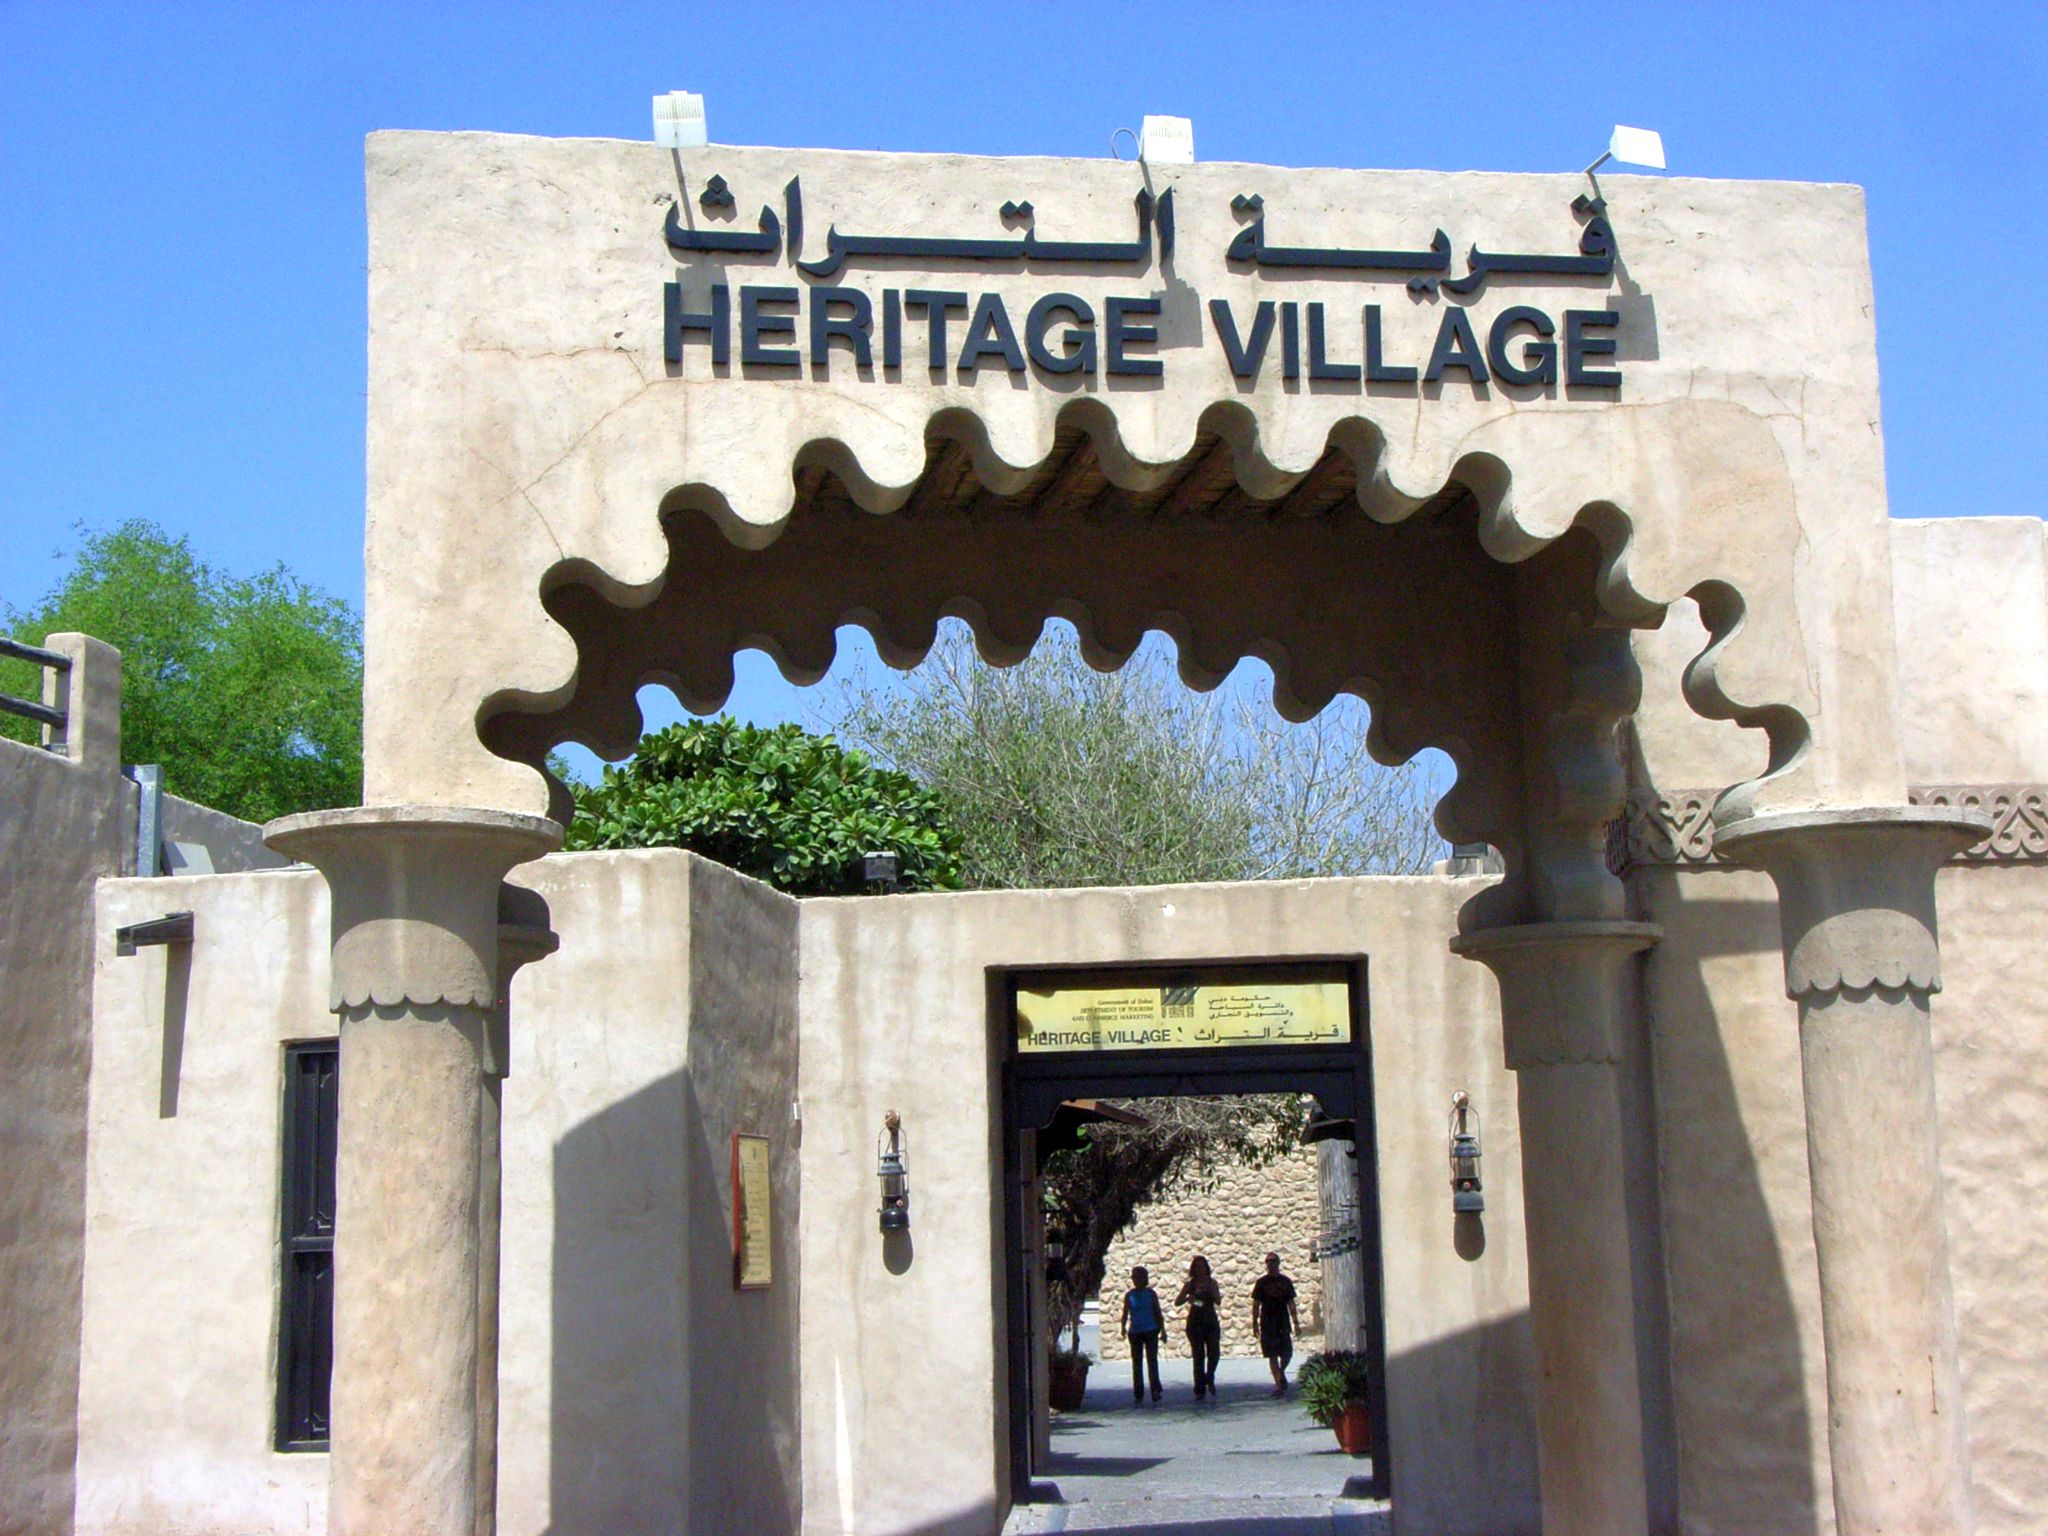 Heritage village